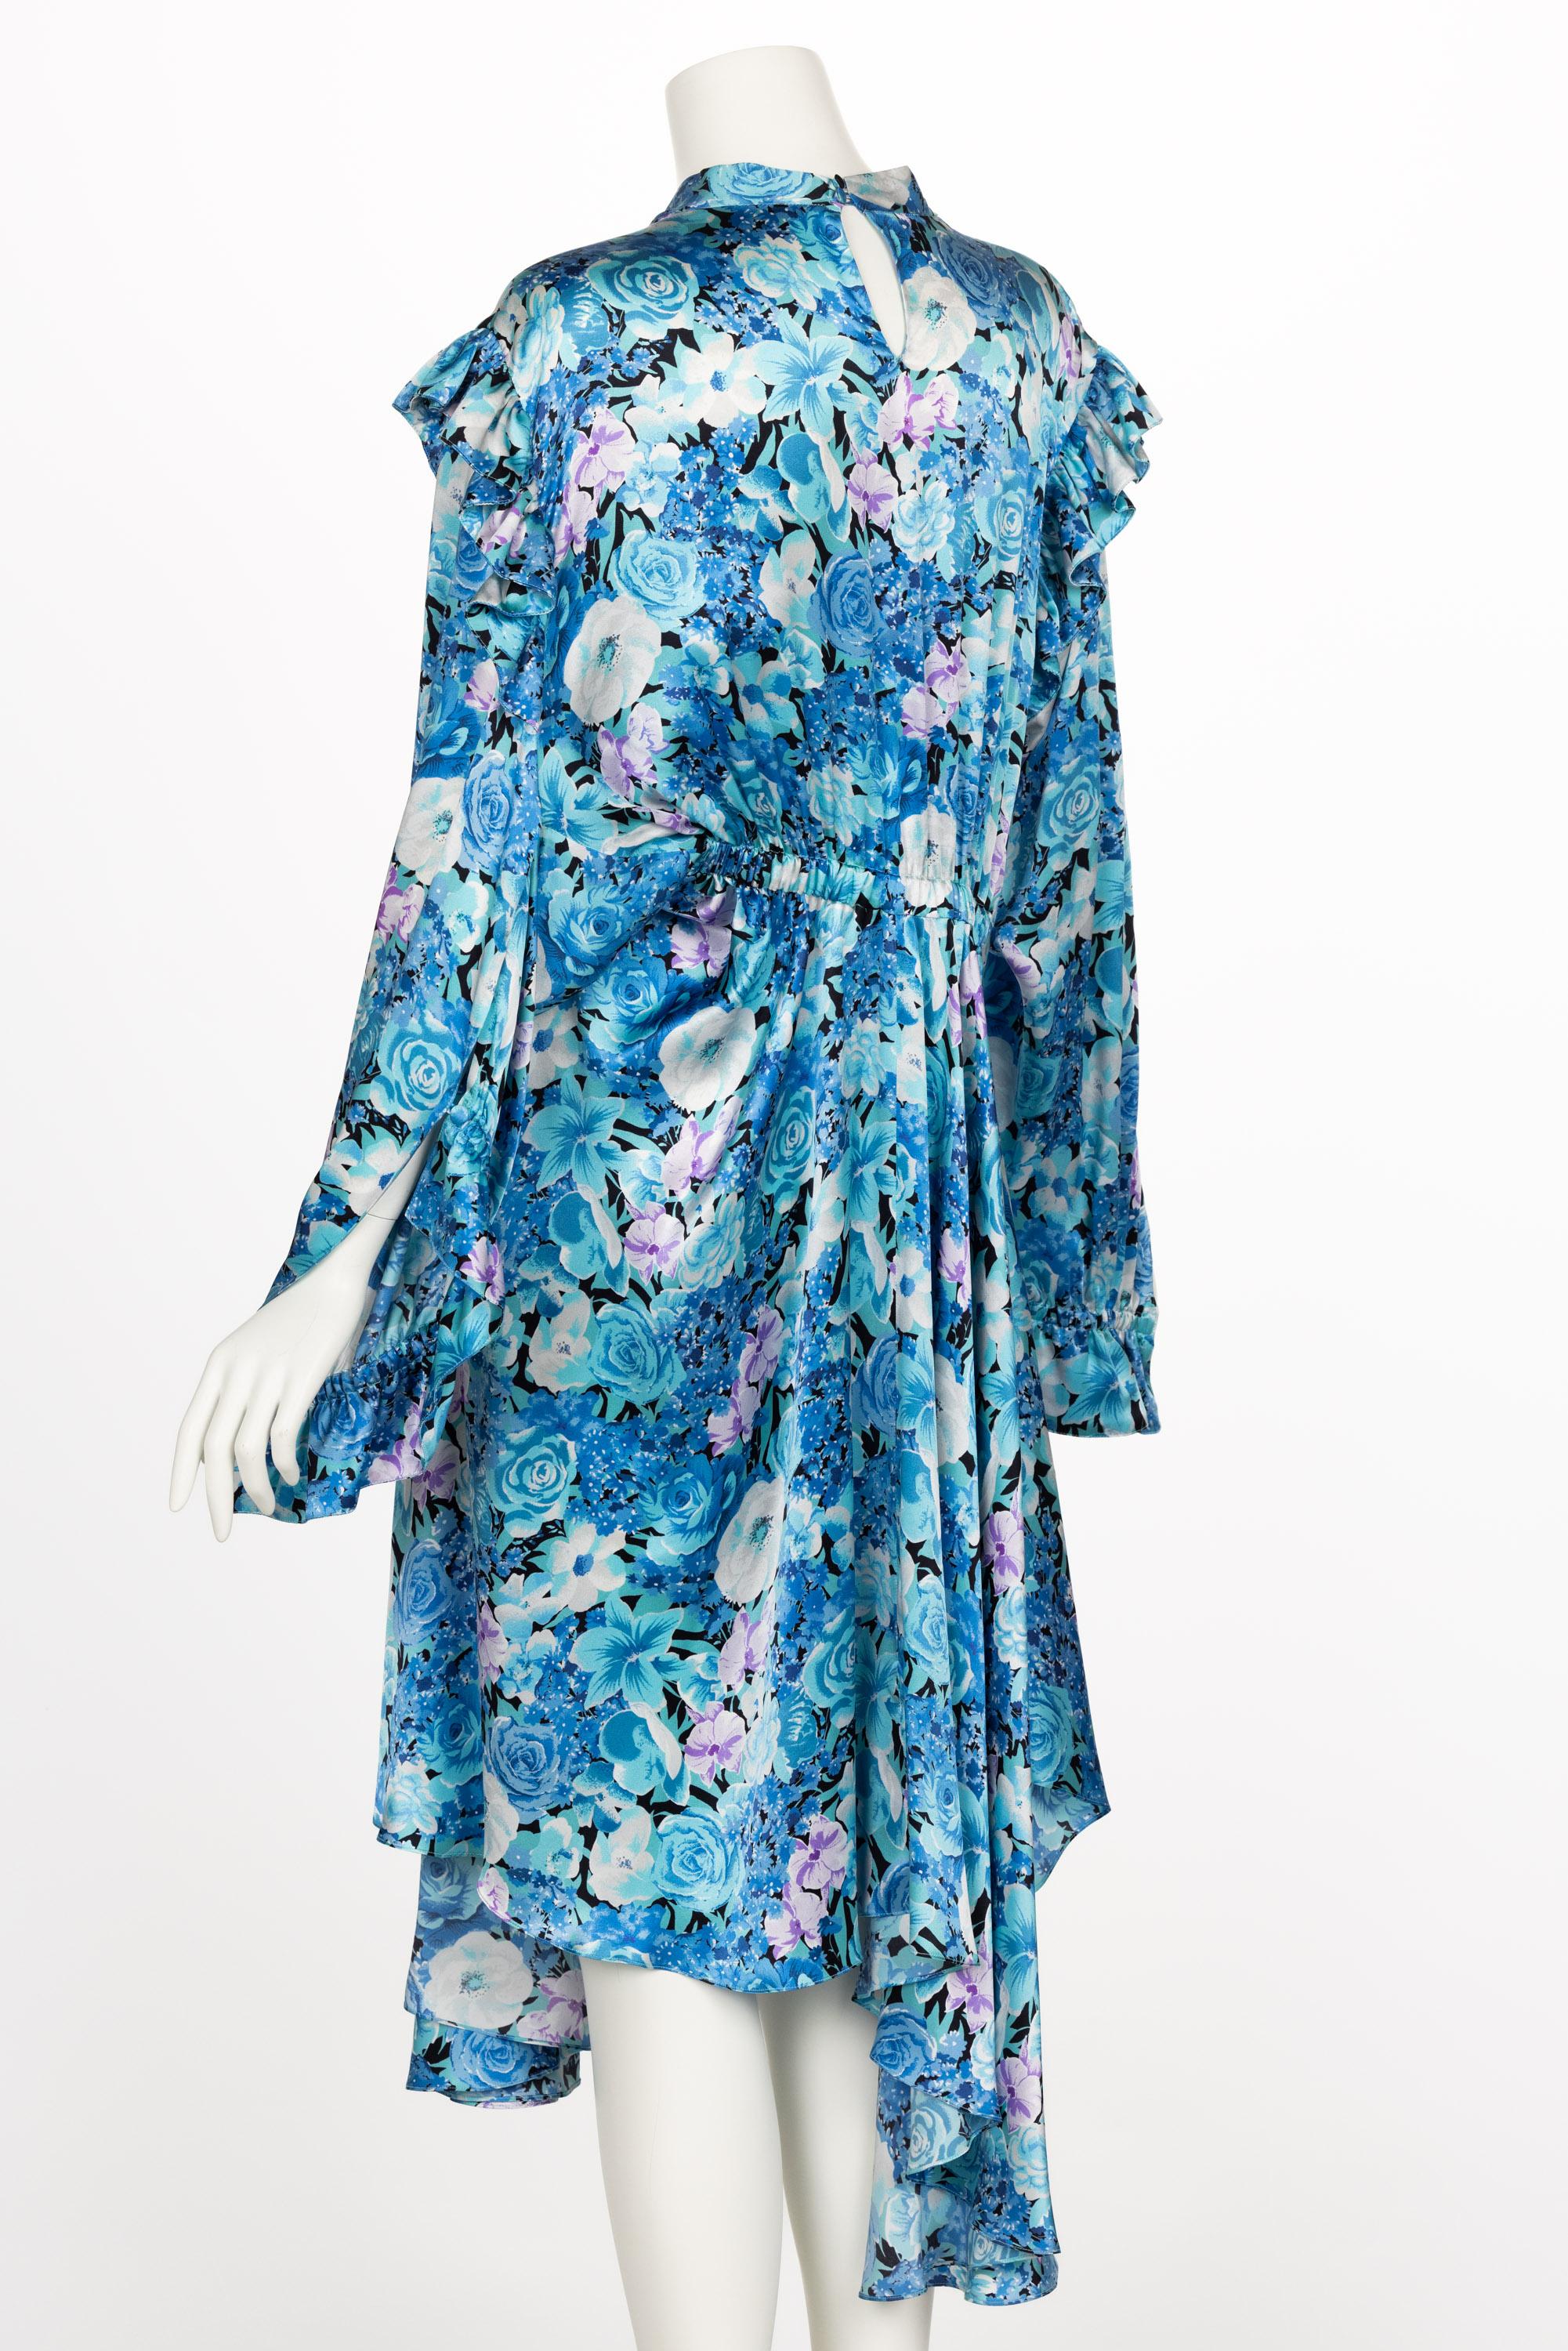 Balenciaga Blue floral print ruffle Satin Midi Dress Spring 2020 In Excellent Condition For Sale In Boca Raton, FL